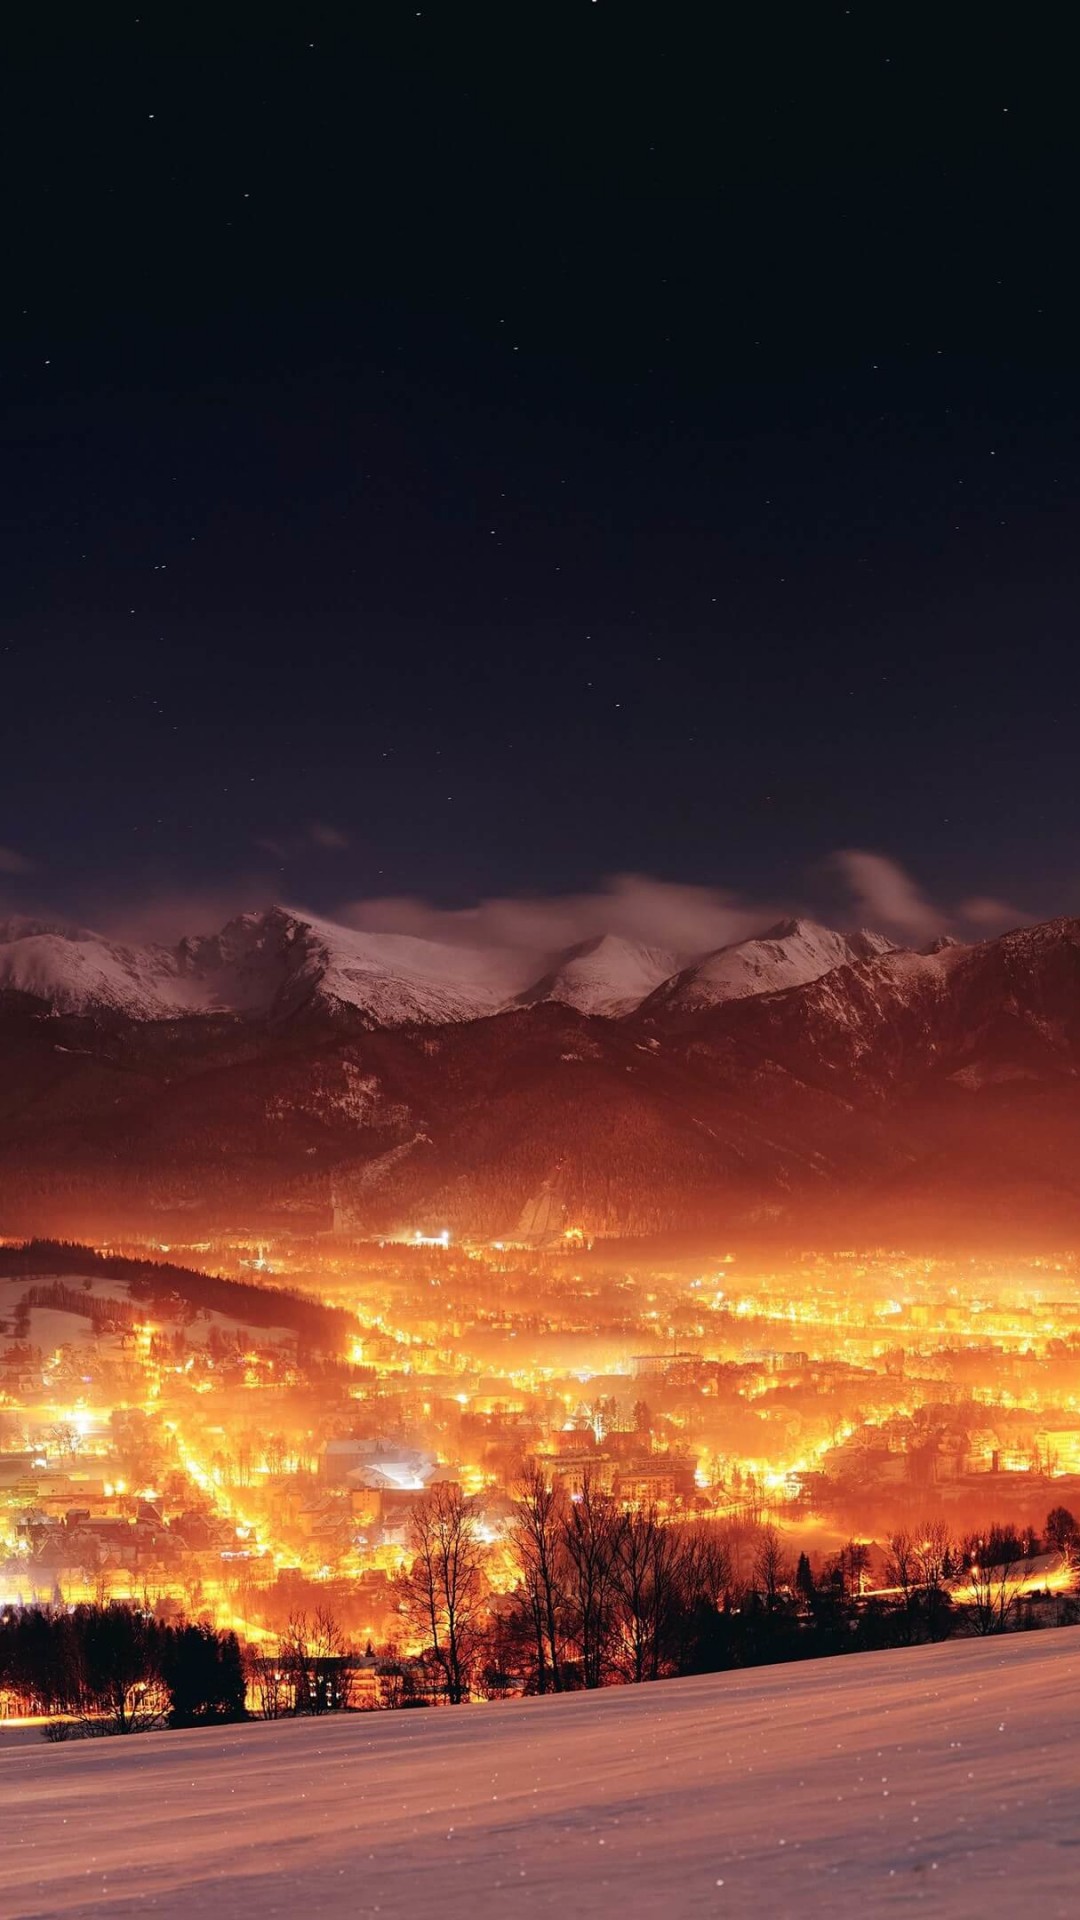 Zakopane City At Night - Poland Wallpaper for HTC One